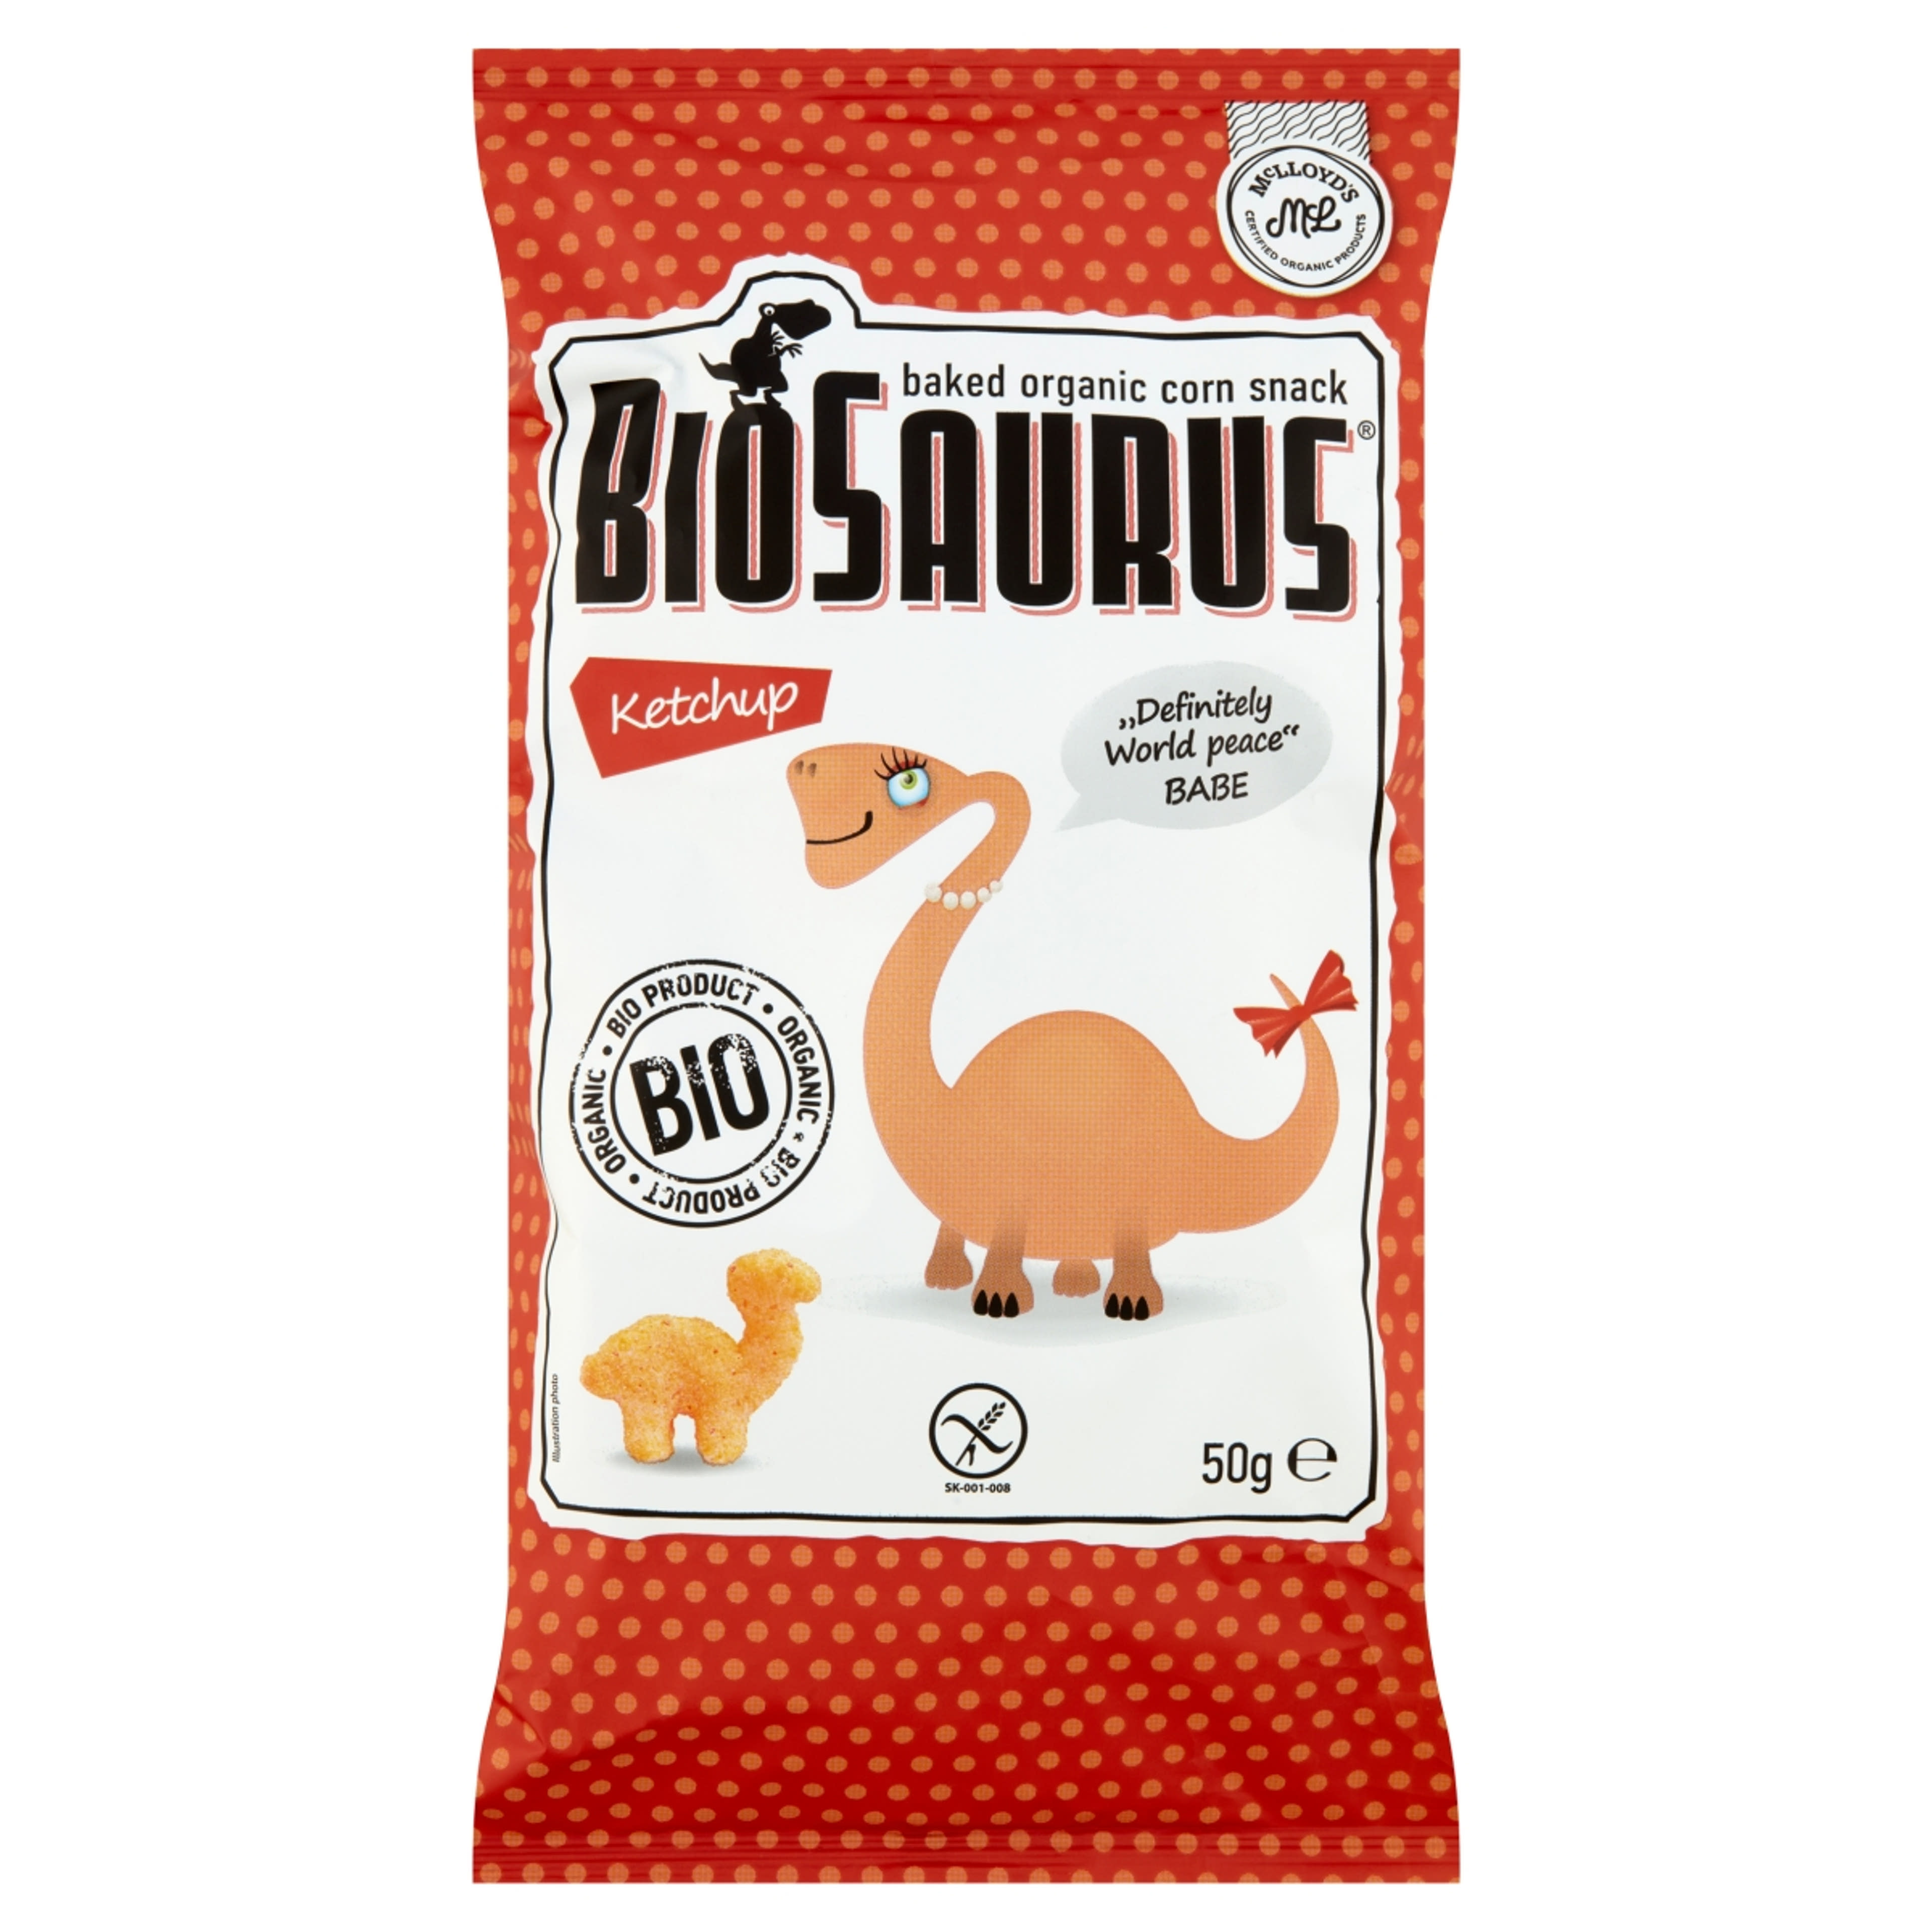 Biopont Biosaurus ketchupos ízű sült kukoricás snack - 50 g